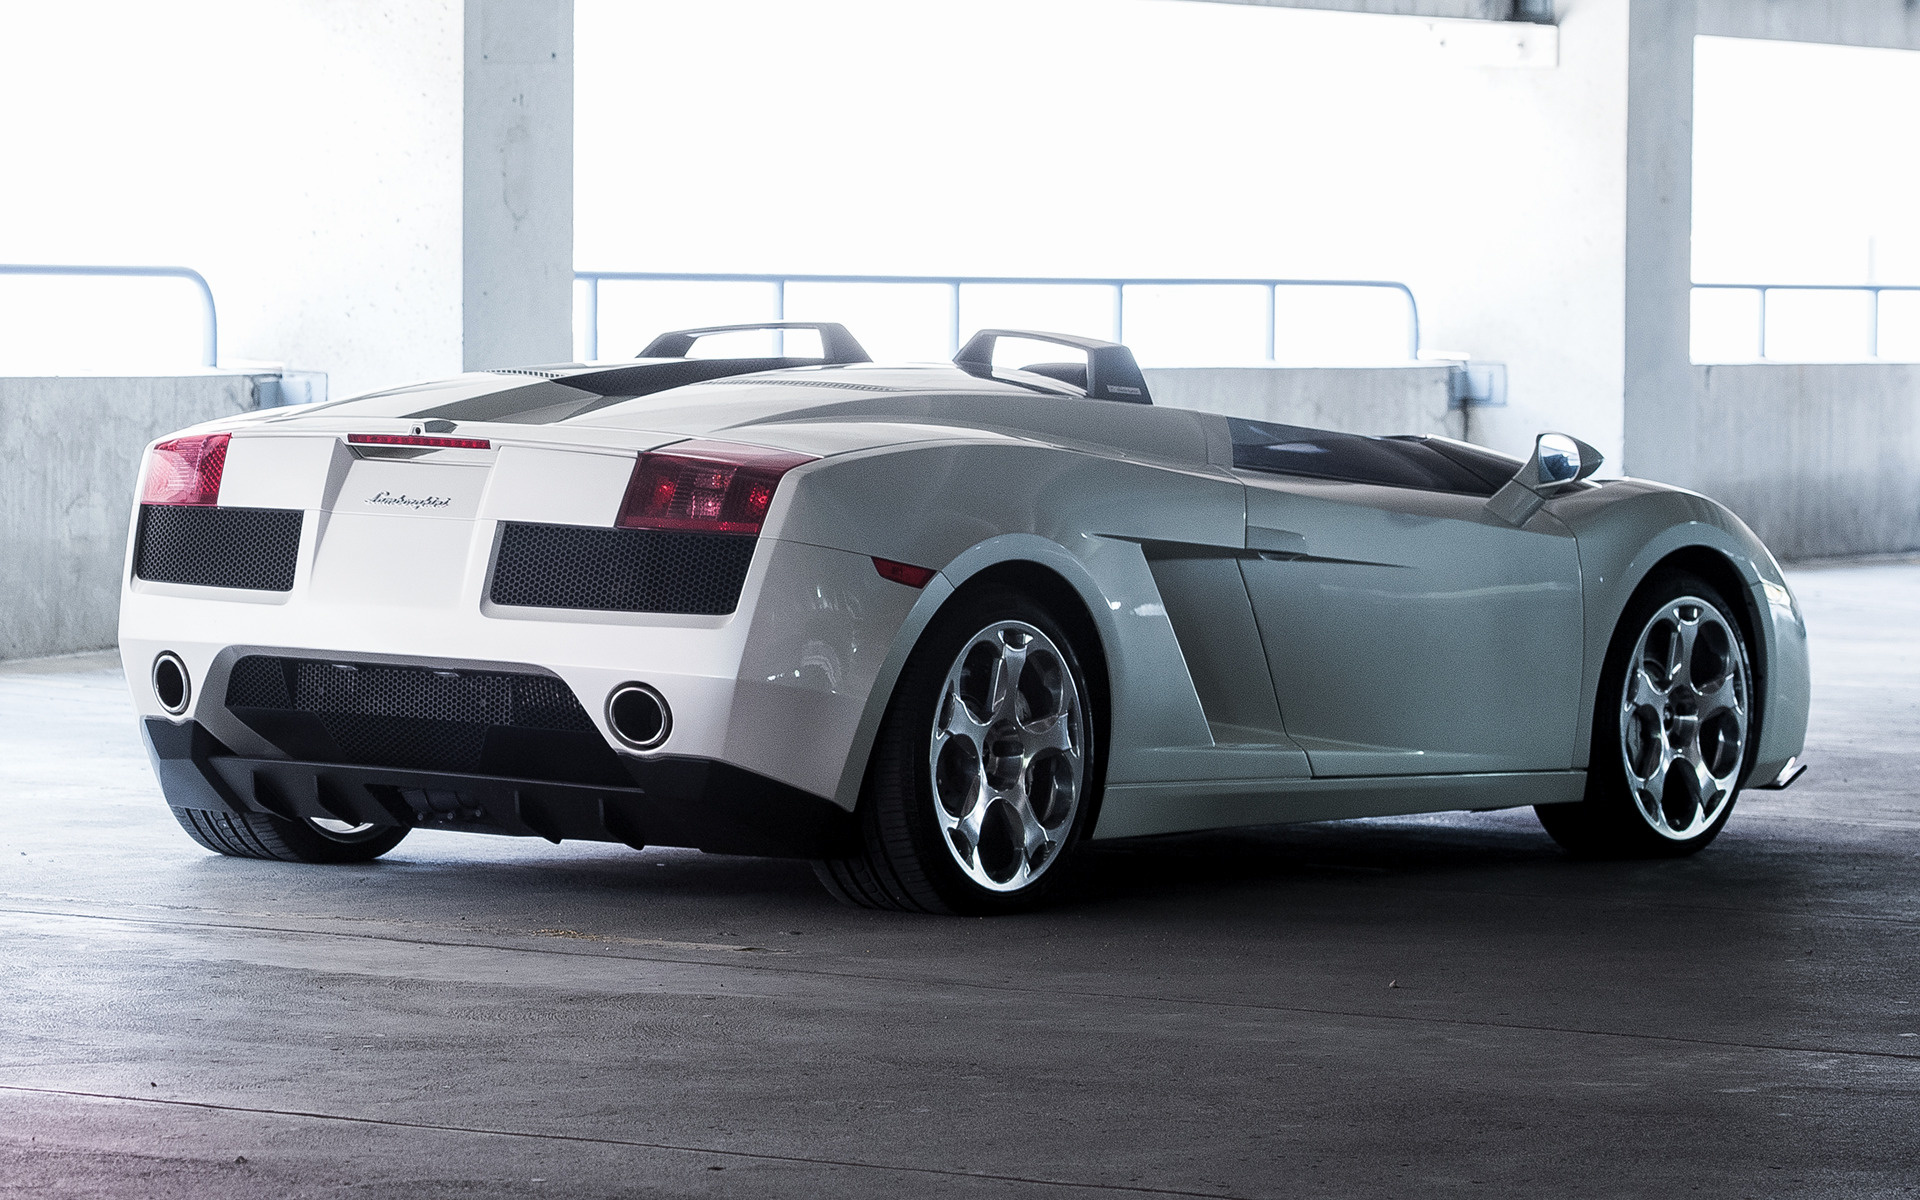 2005 Lamborghini Concept S - Wallpapers and HD Images | Car Pixel